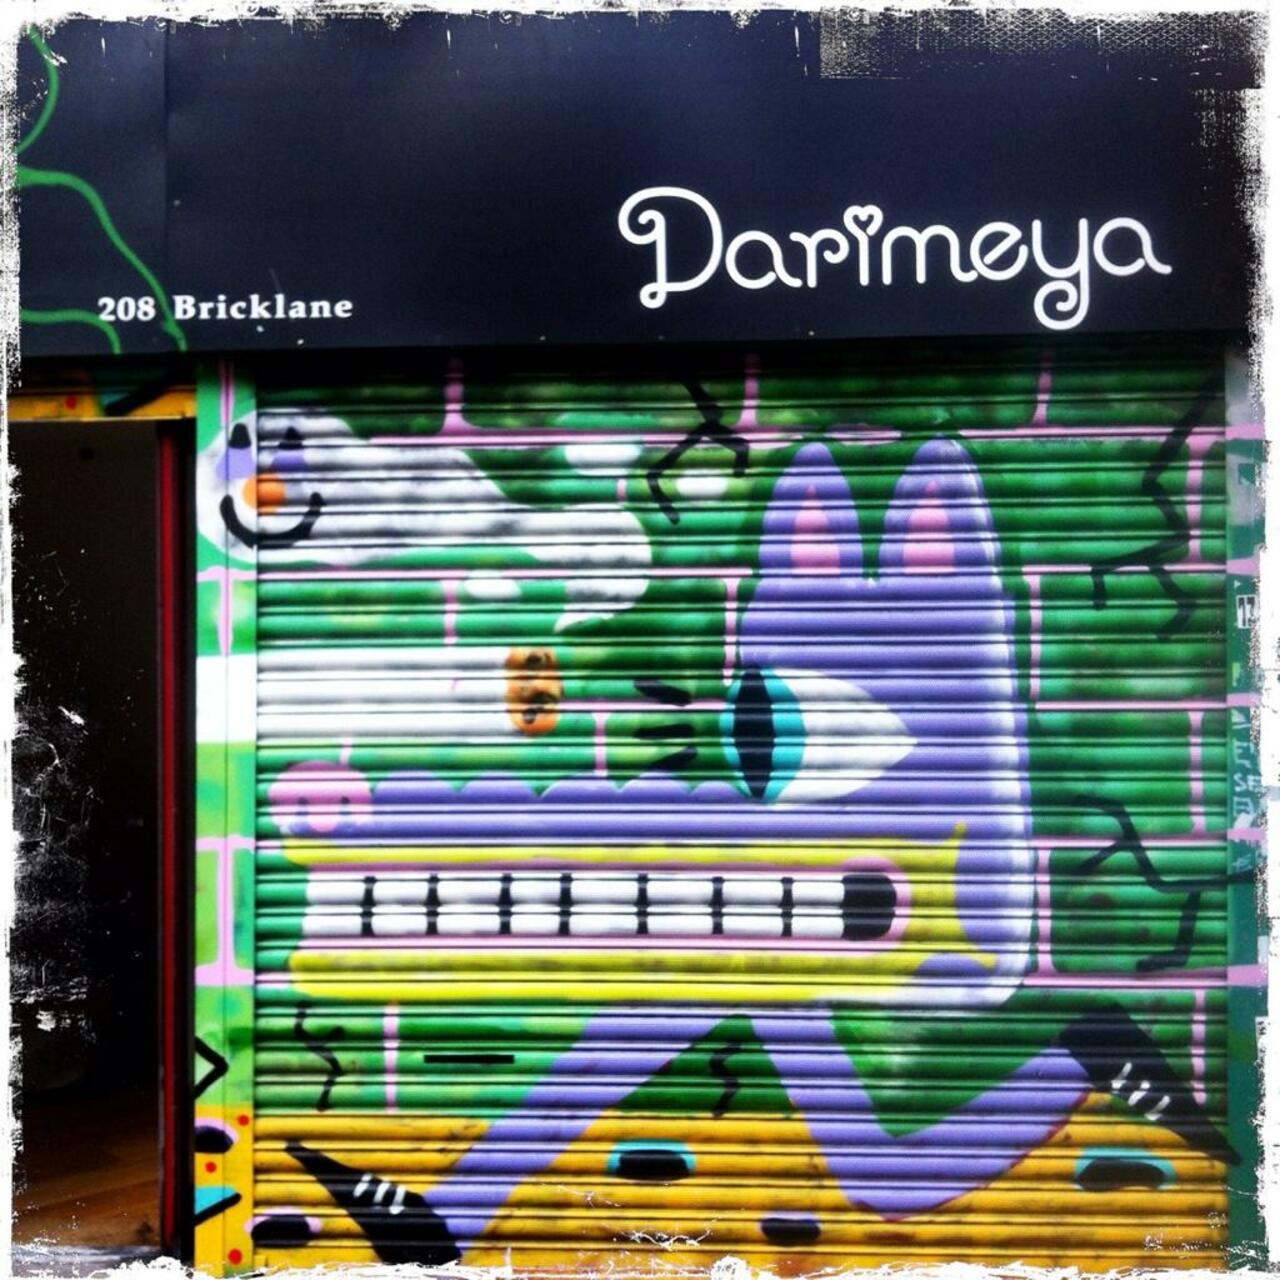 Darimeya on Brick Lane

Artwork by @TastyMalark #art #streetart #graffiti http://t.co/RPg1Ls2k5N